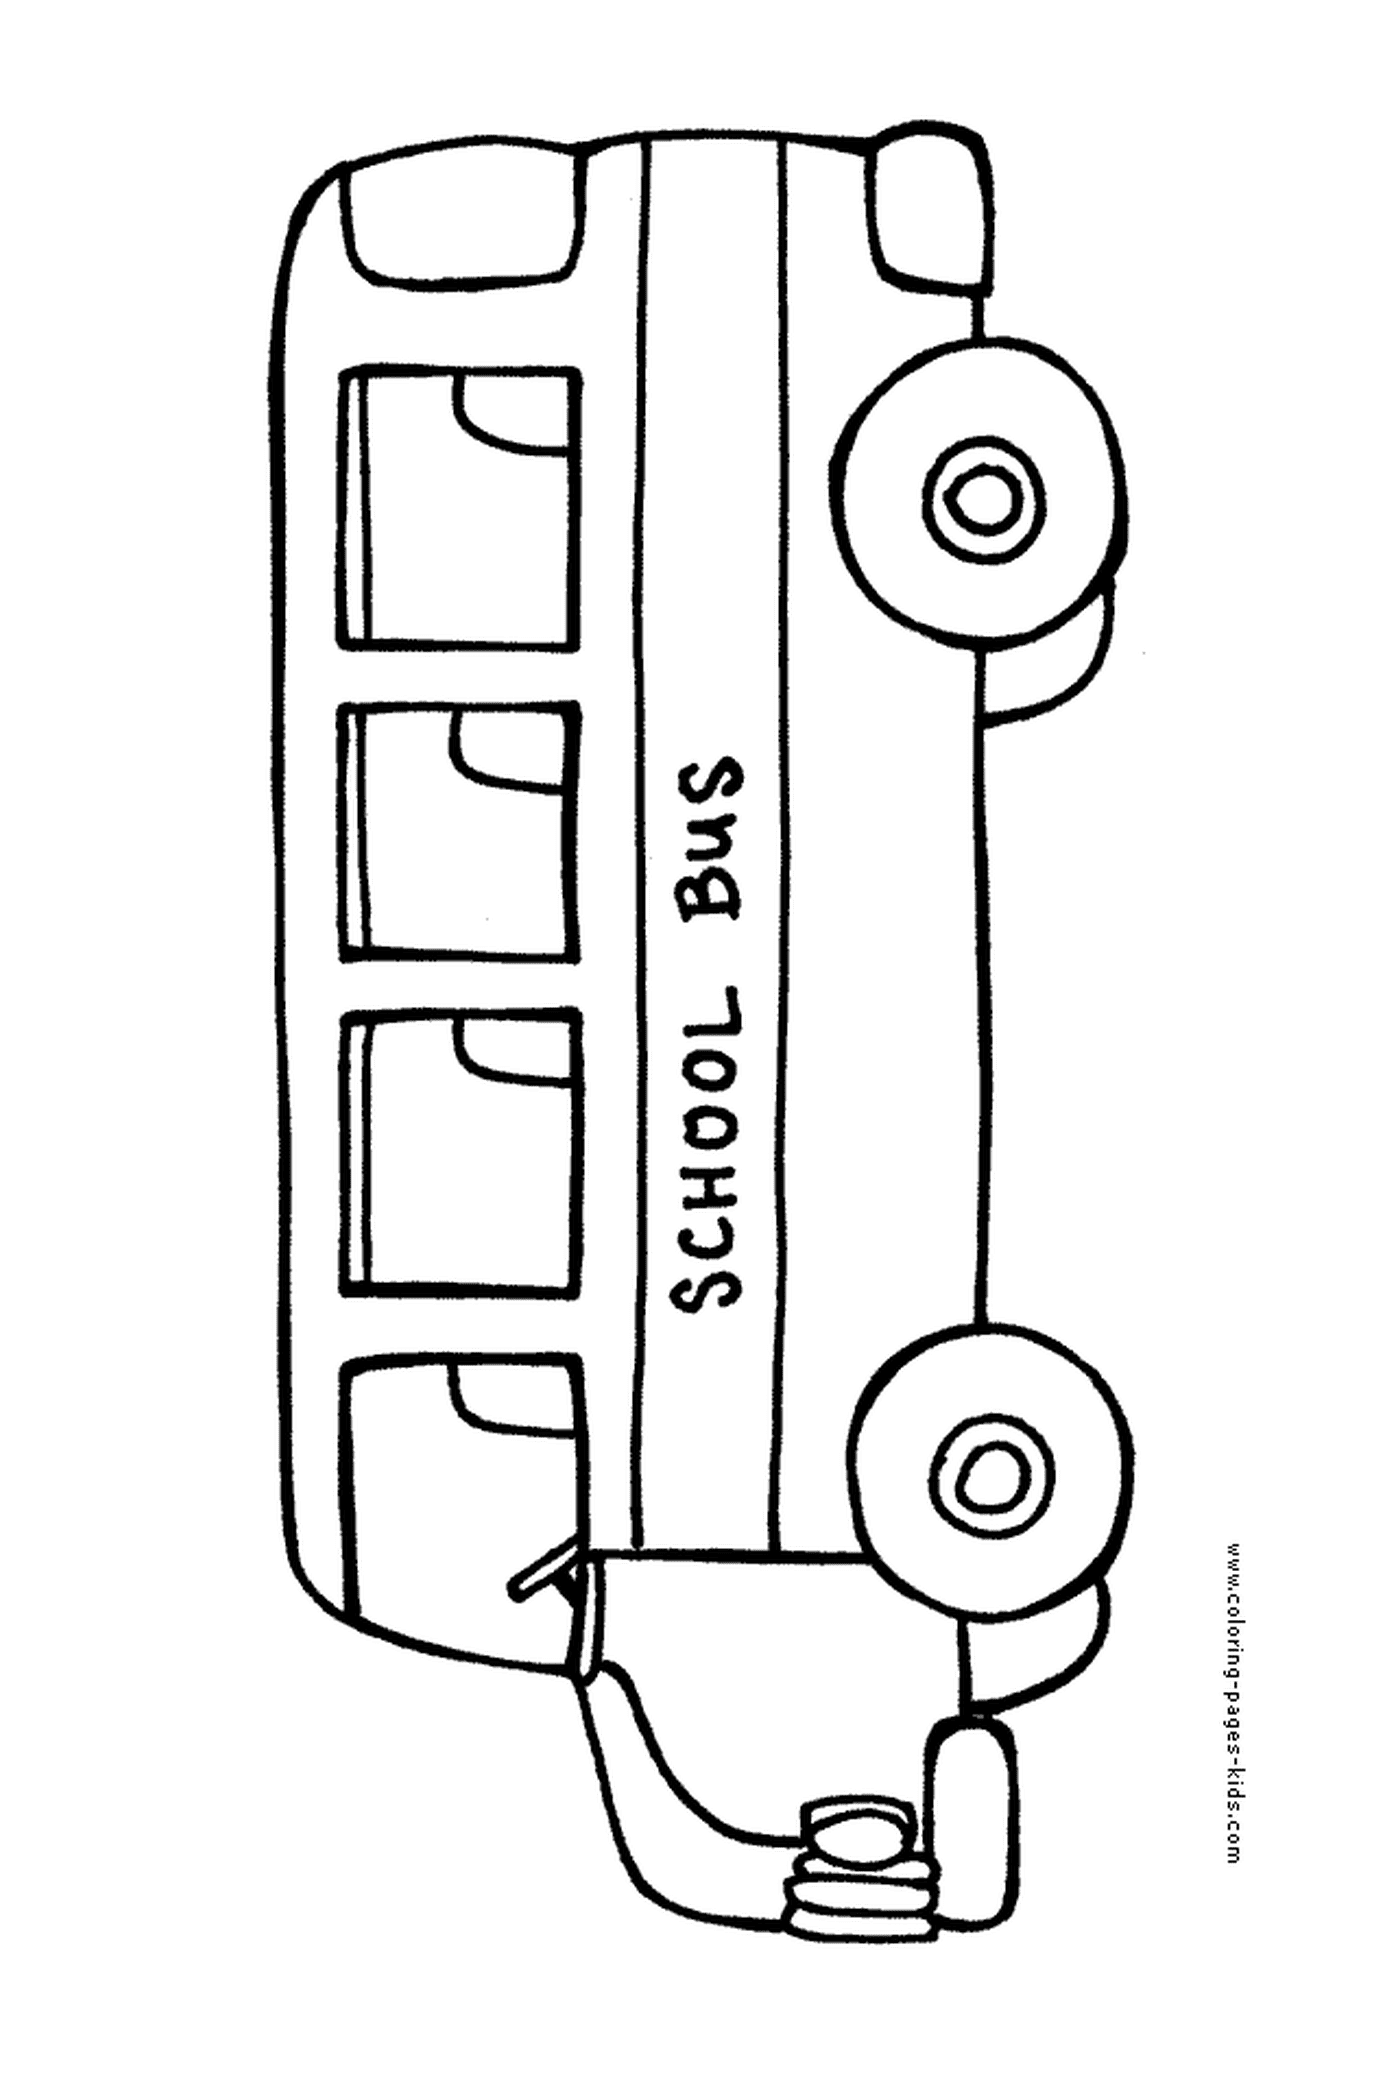  Un autobús escolar se mueve lentamente 